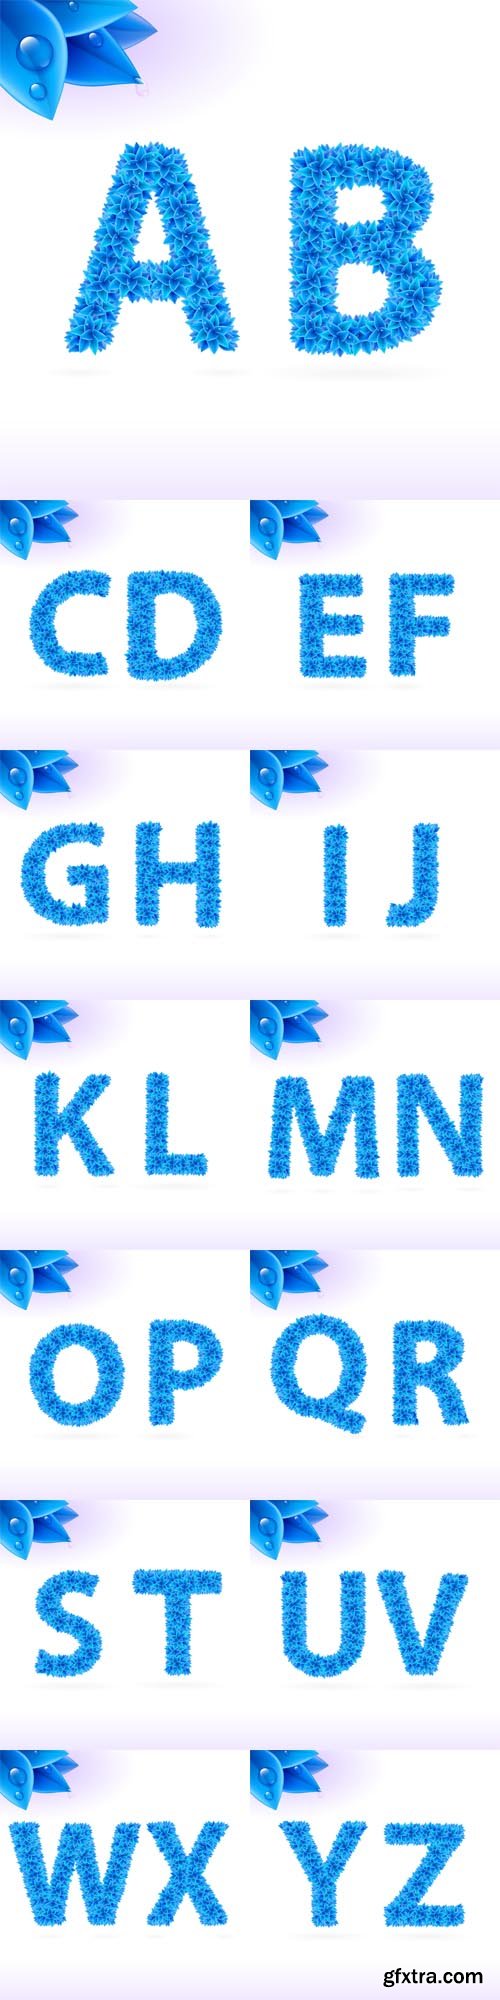 Vector Set - Sans Serif Font with Blue Leaf Decoration